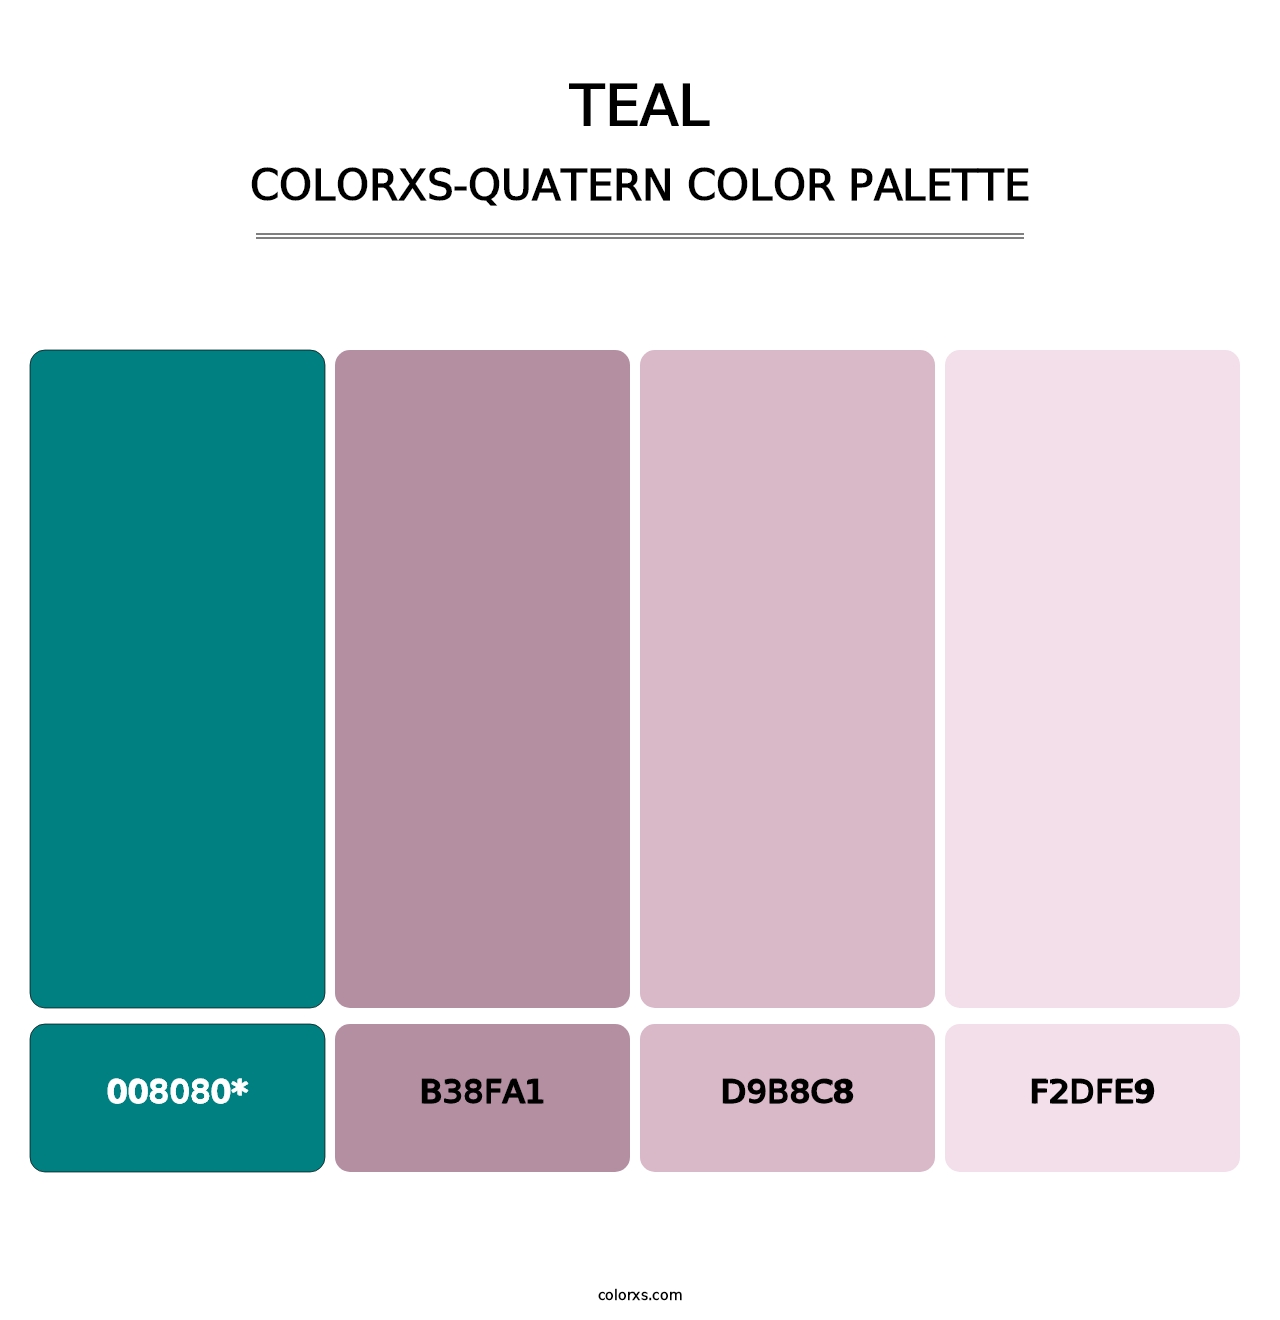 Teal - Colorxs Quatern Palette